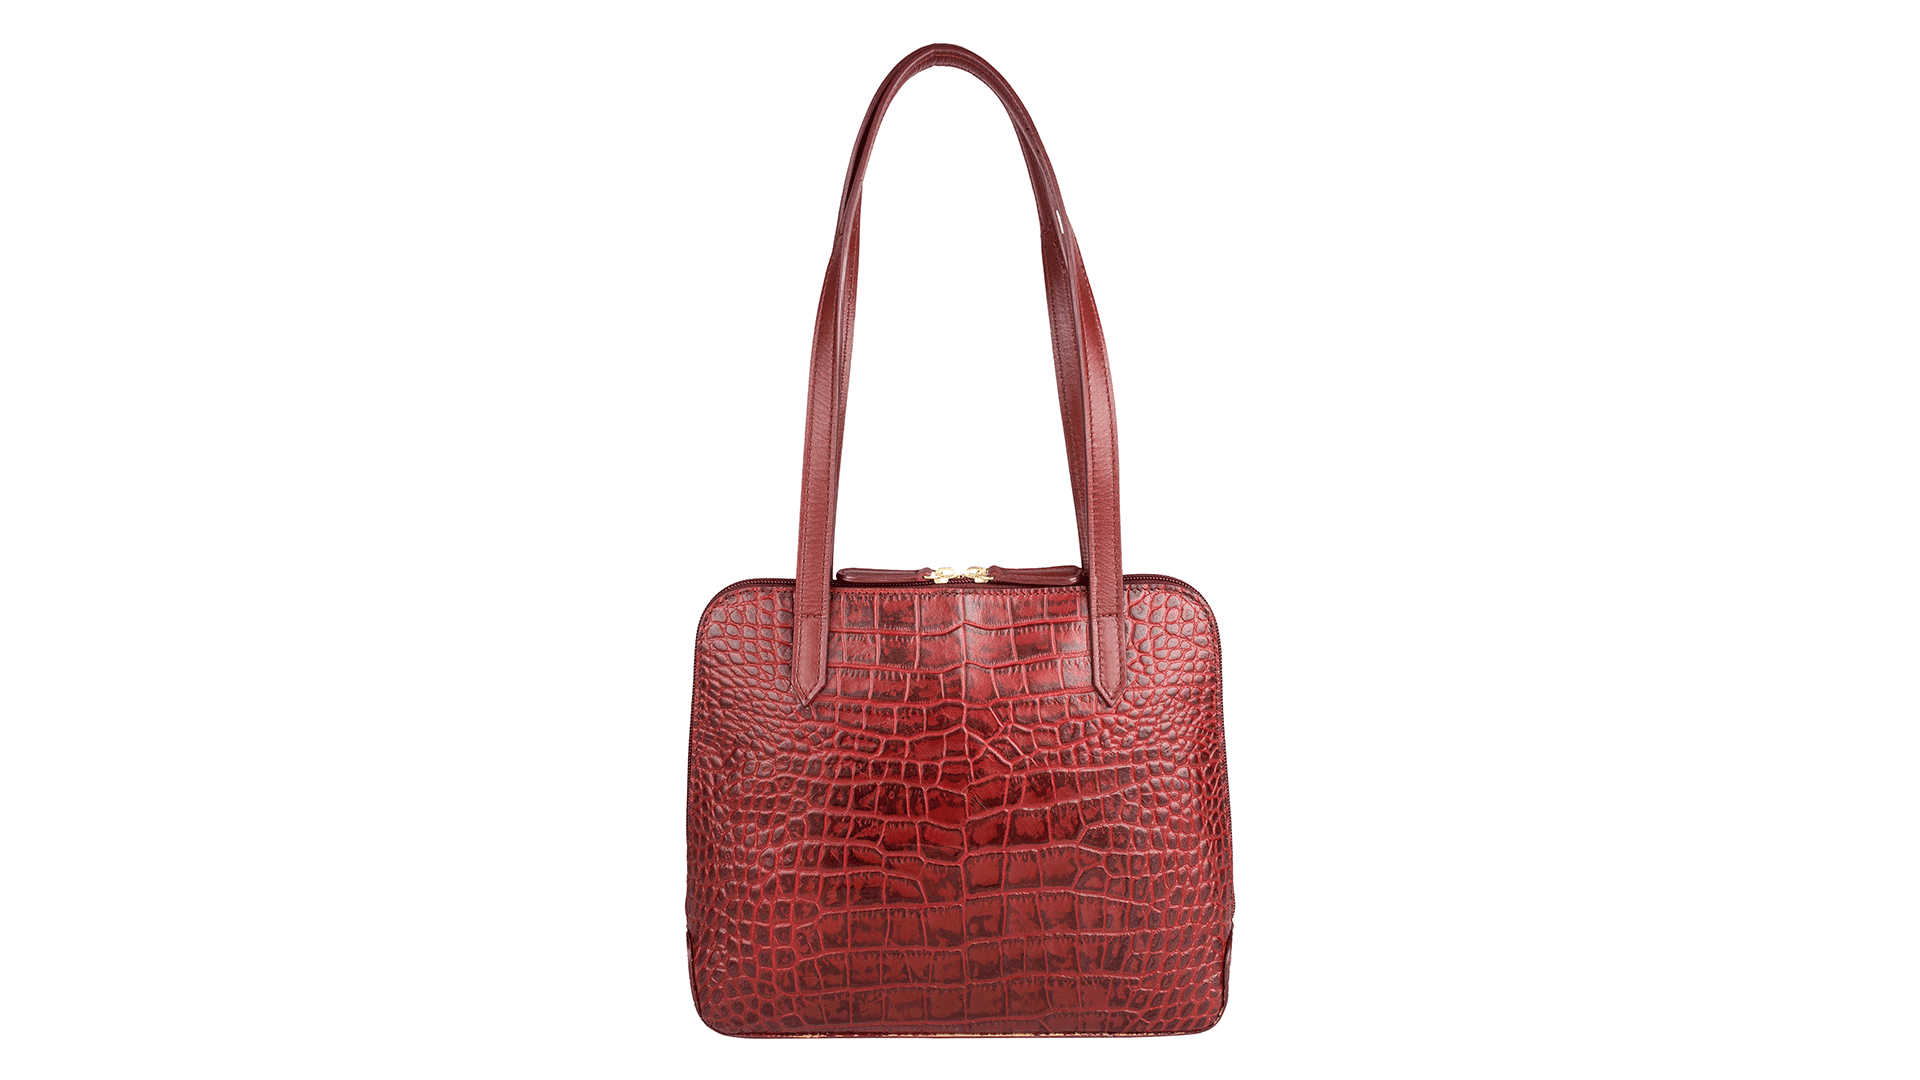 Hidesign Women's Tote Bag (Red) : : Fashion